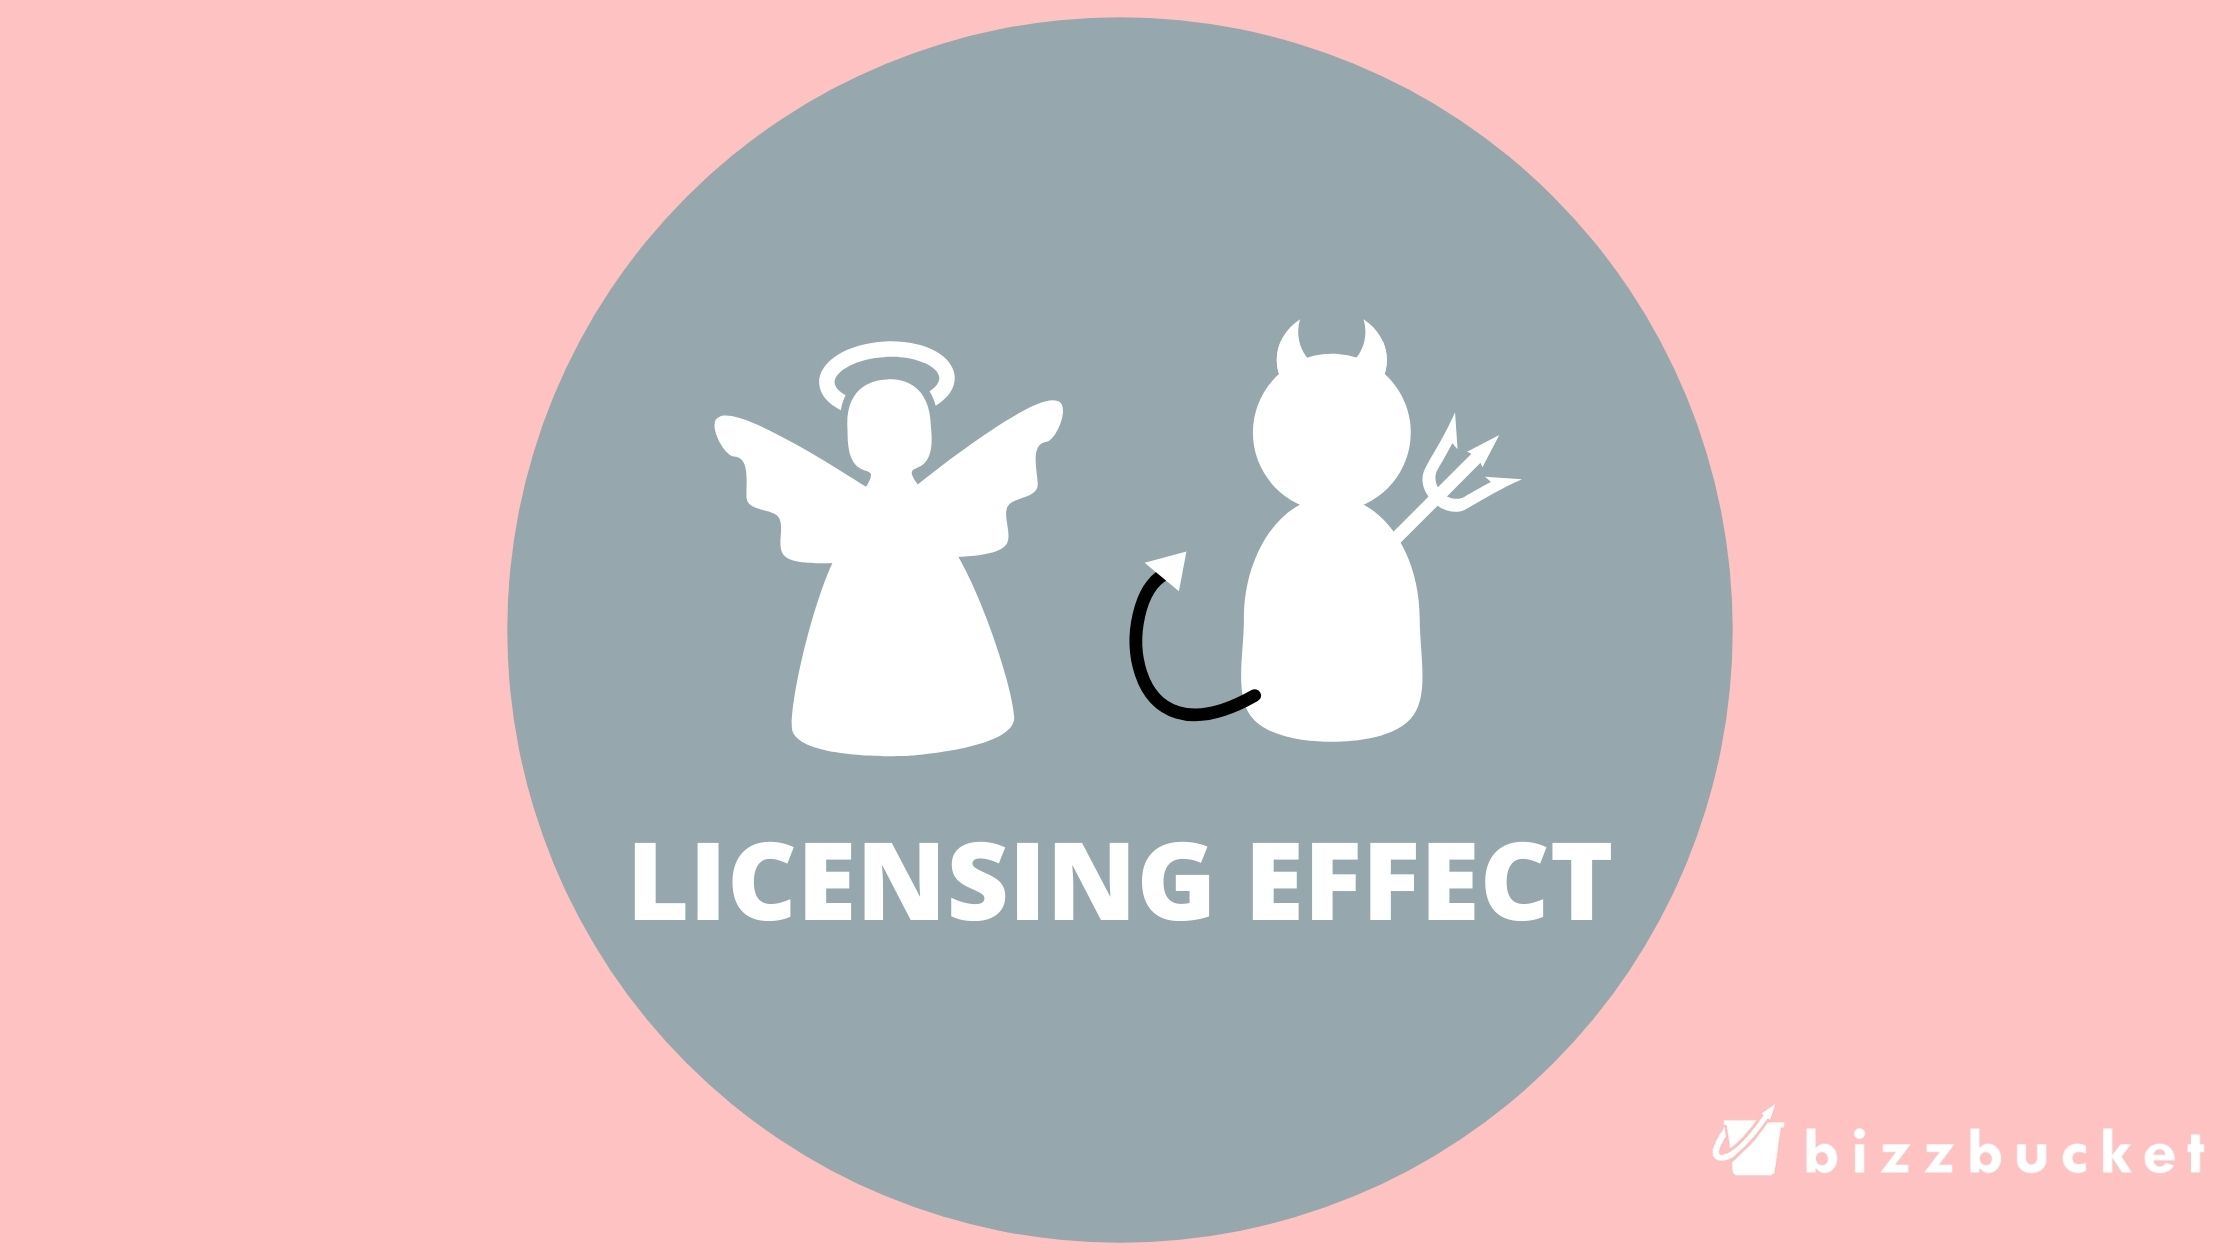 Licensing effect